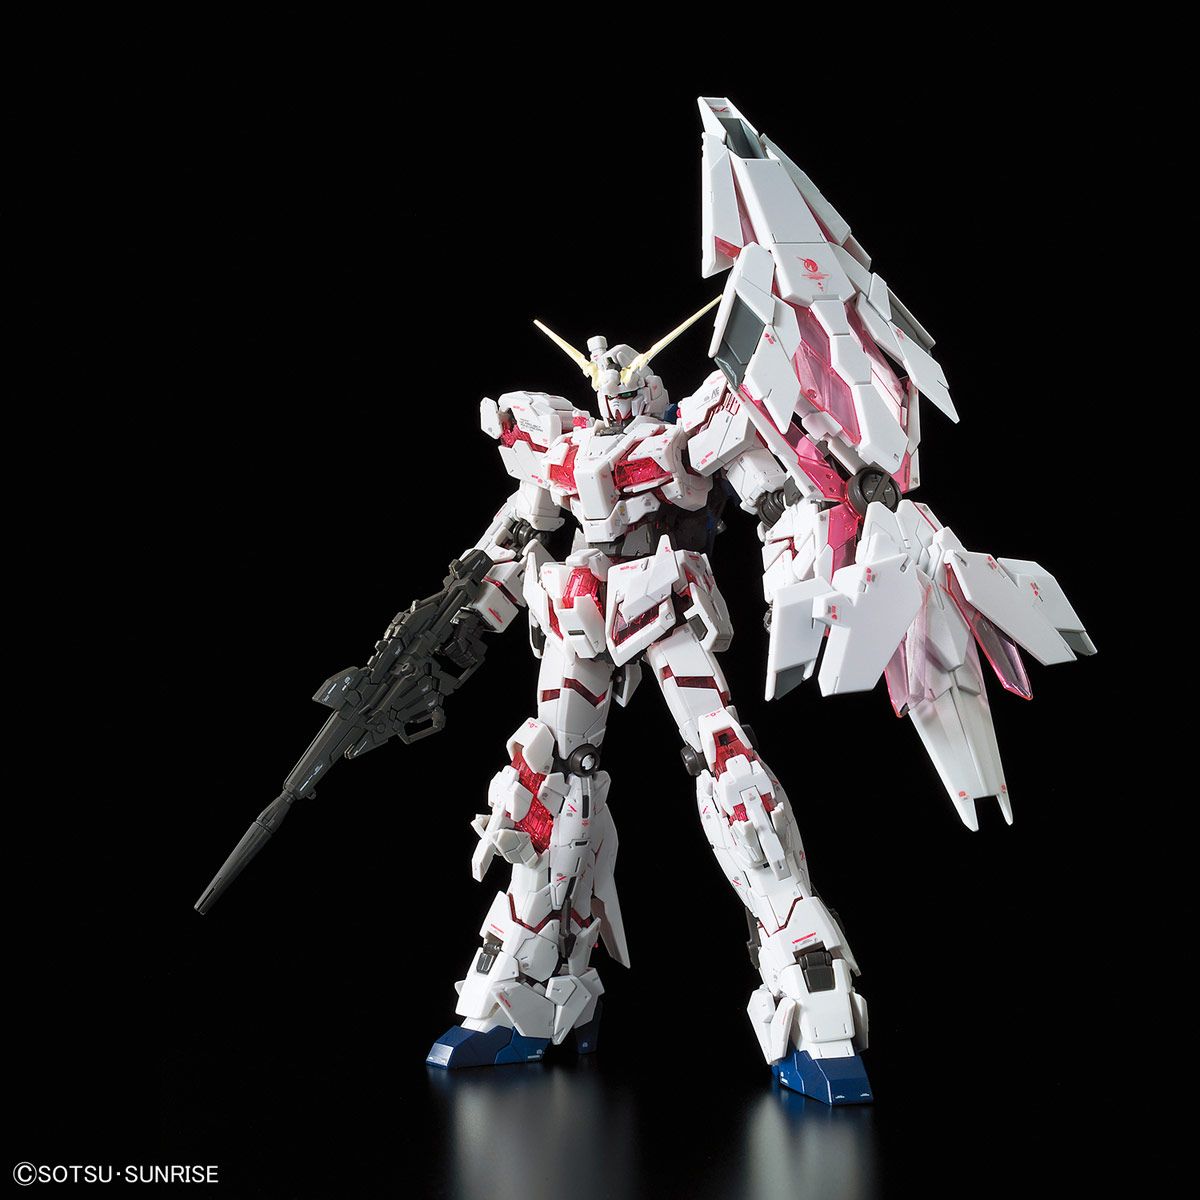 Gundam 1/144 RG Gundam Unicorn RX-0 Unicorn Gundam Bandee Dessinee Ver. Model Kit Exclusive